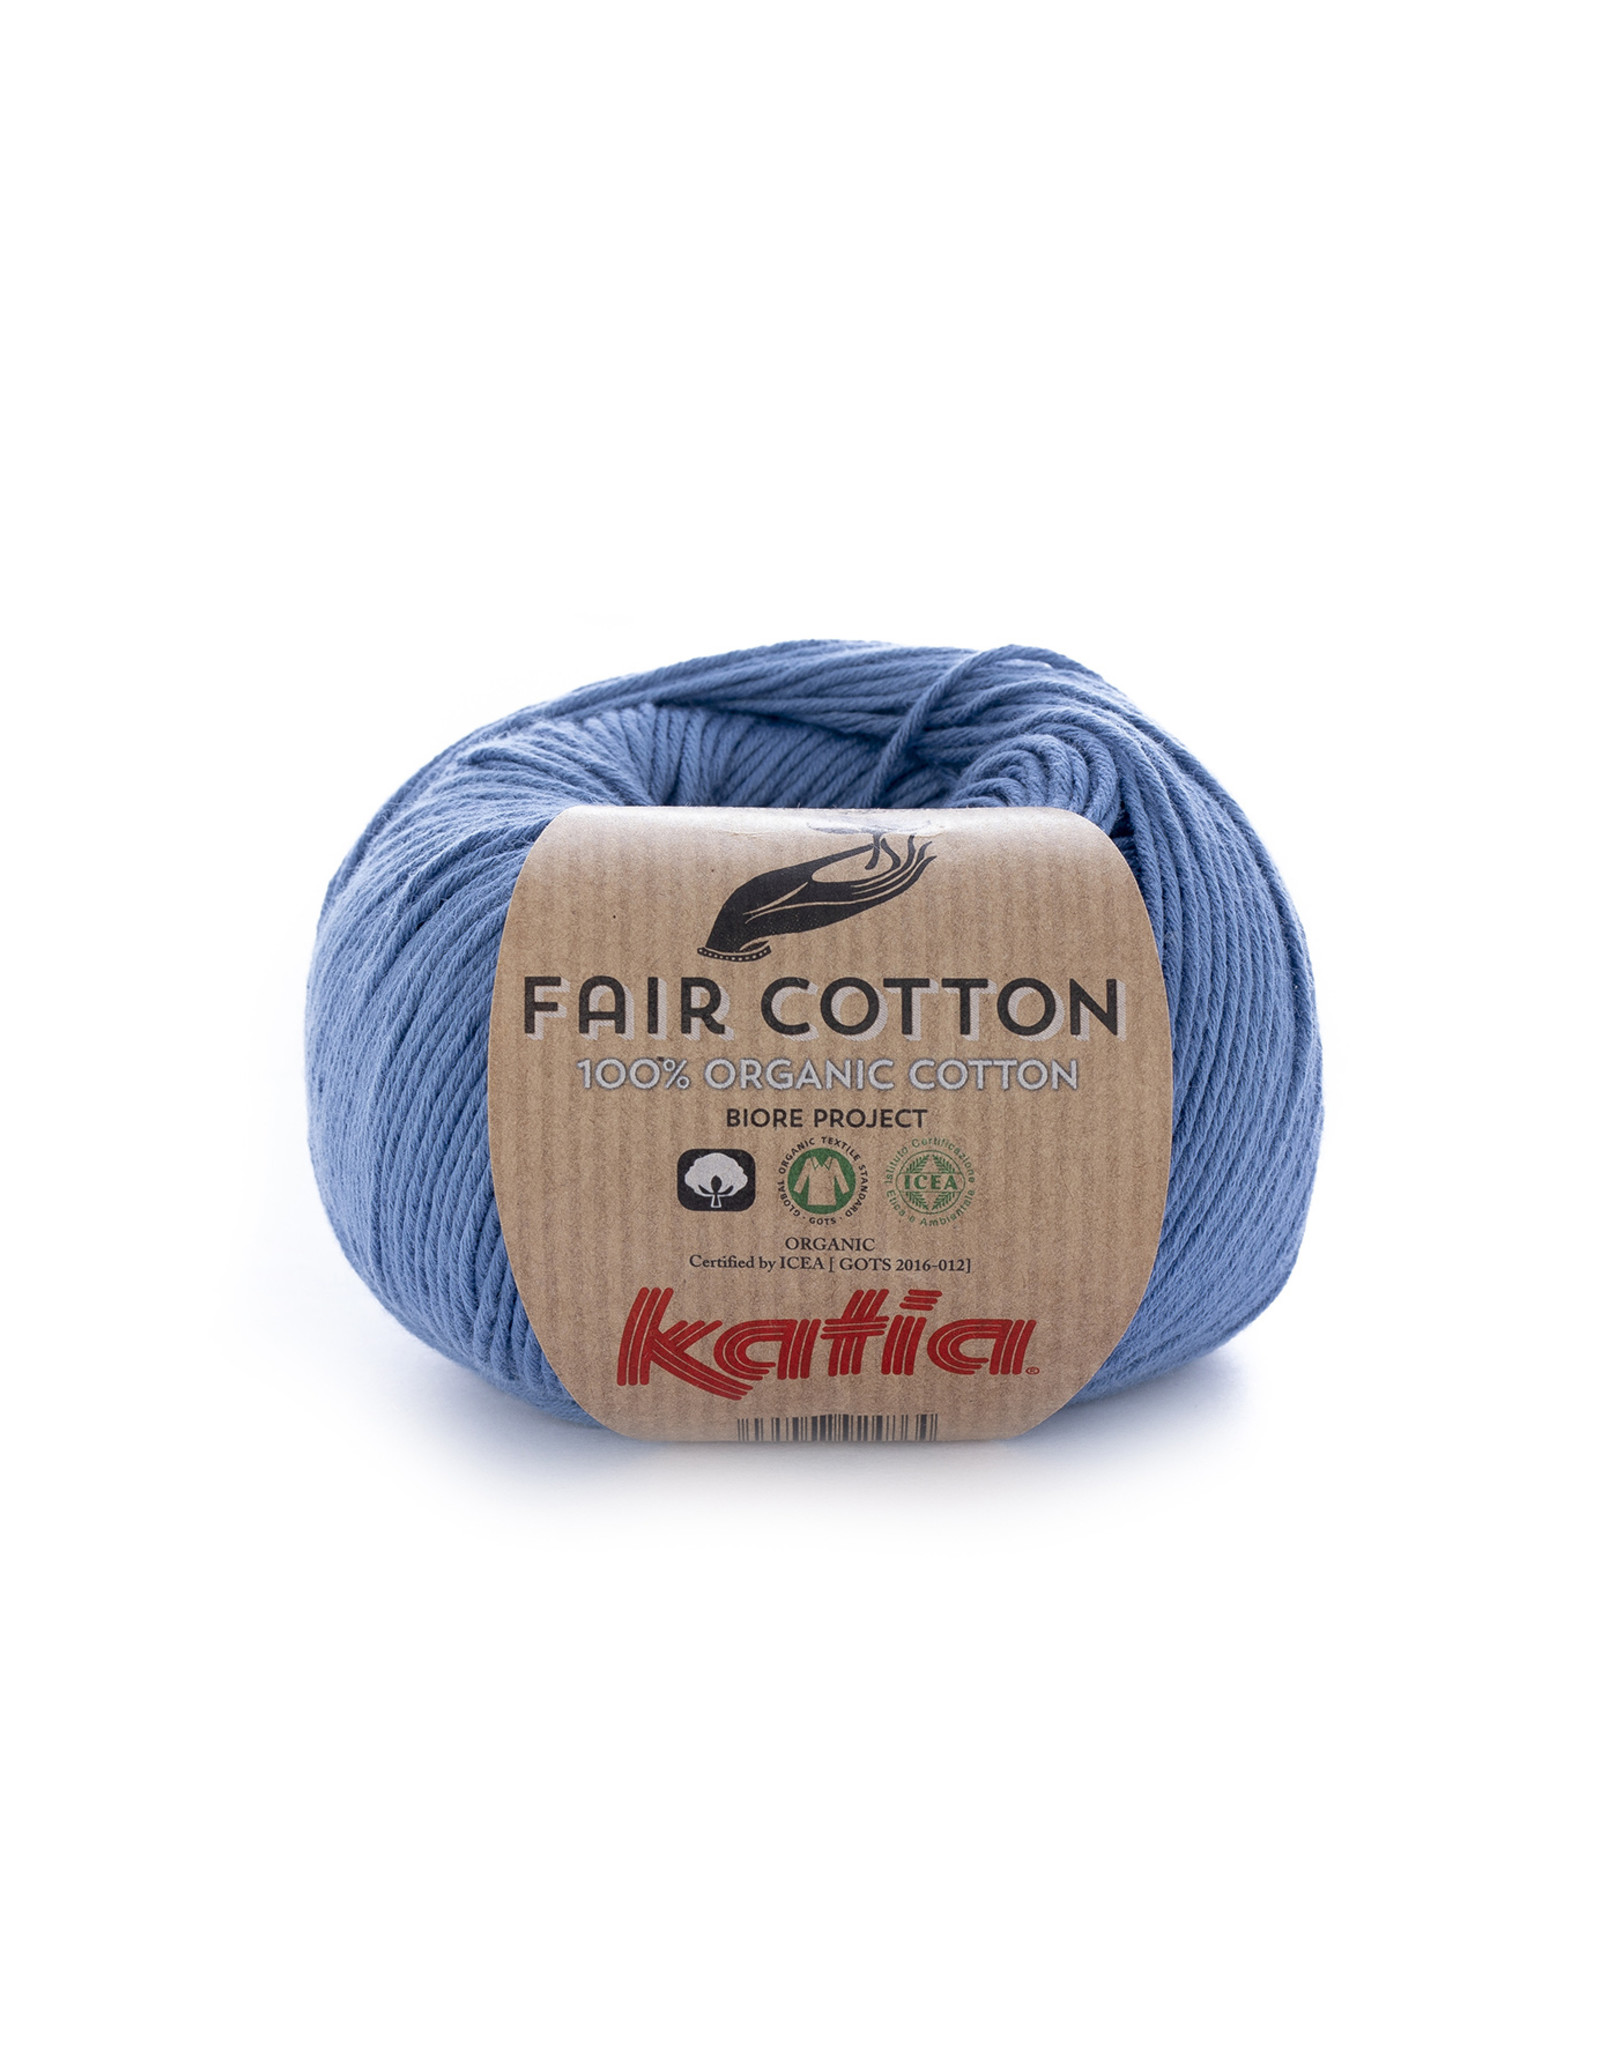 Katia Fair Cotton (2)